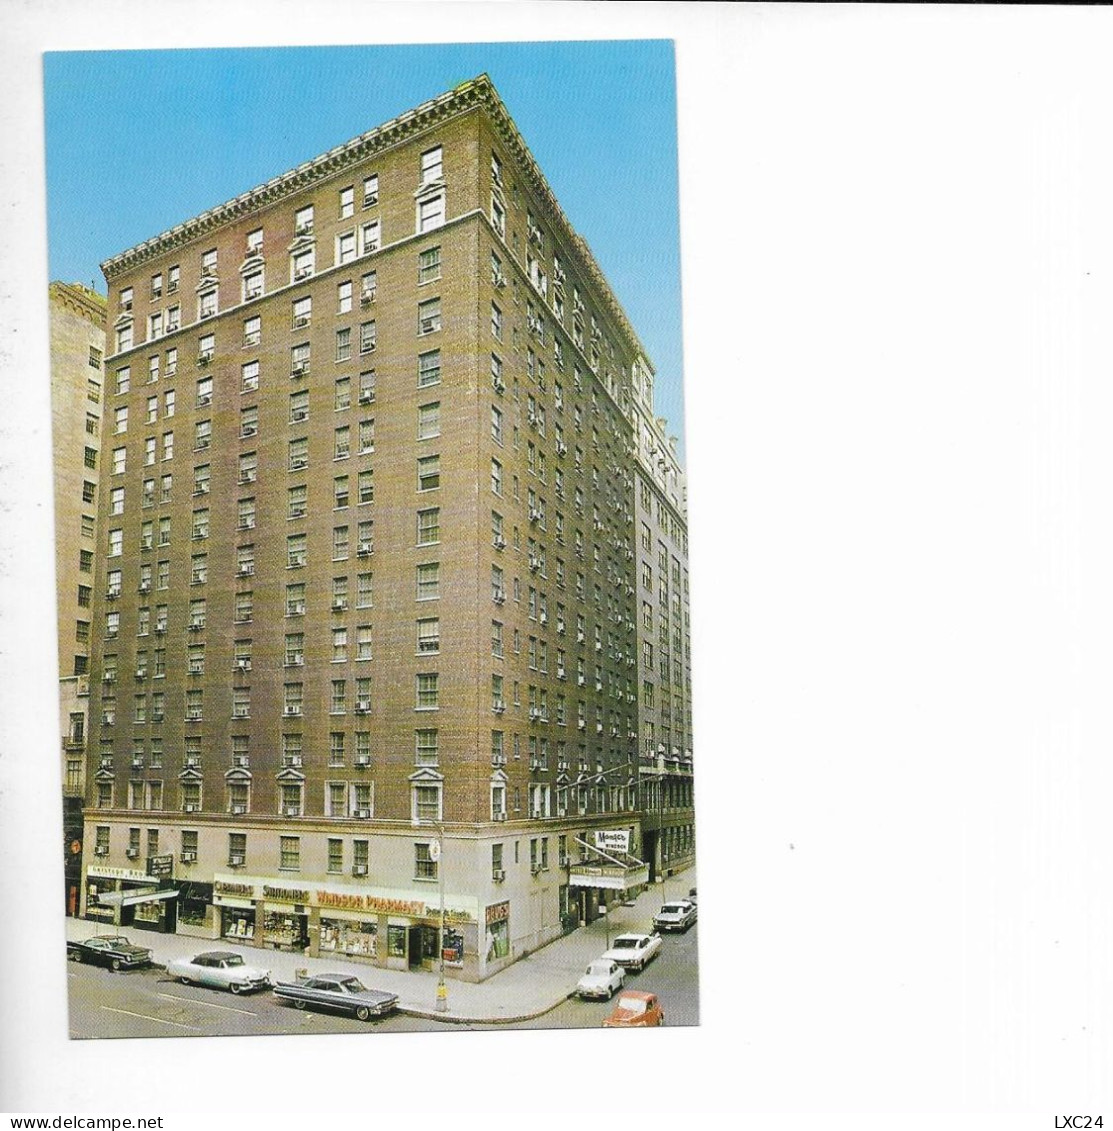 THE MANGER WINDSOR HOTEL. NEW YORK. - Cafes, Hotels & Restaurants